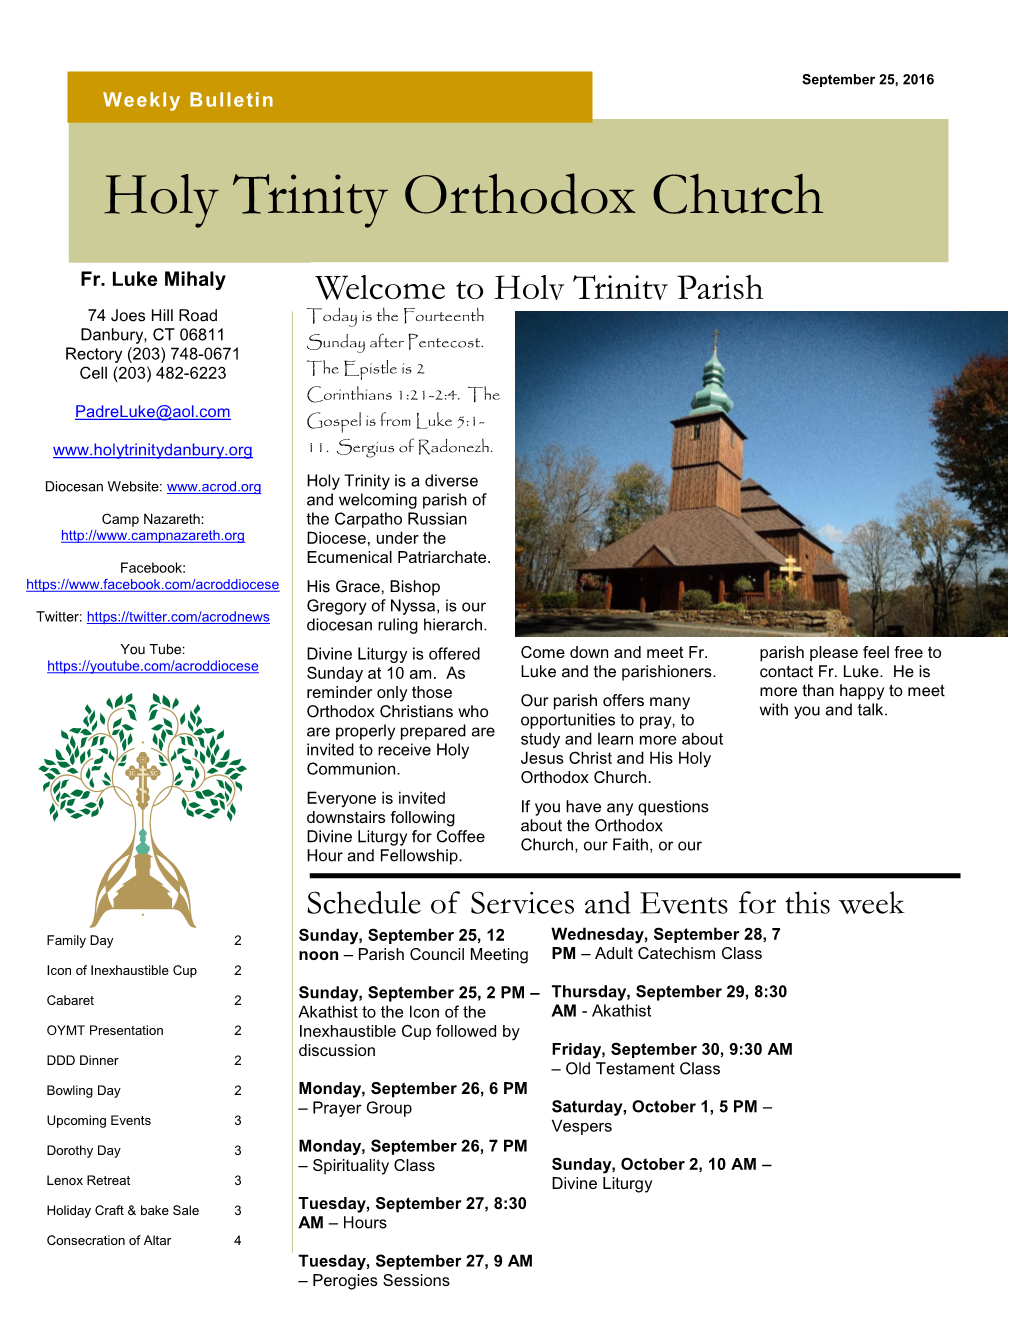 Holy Trinity Orthodox Church, Danbury CT